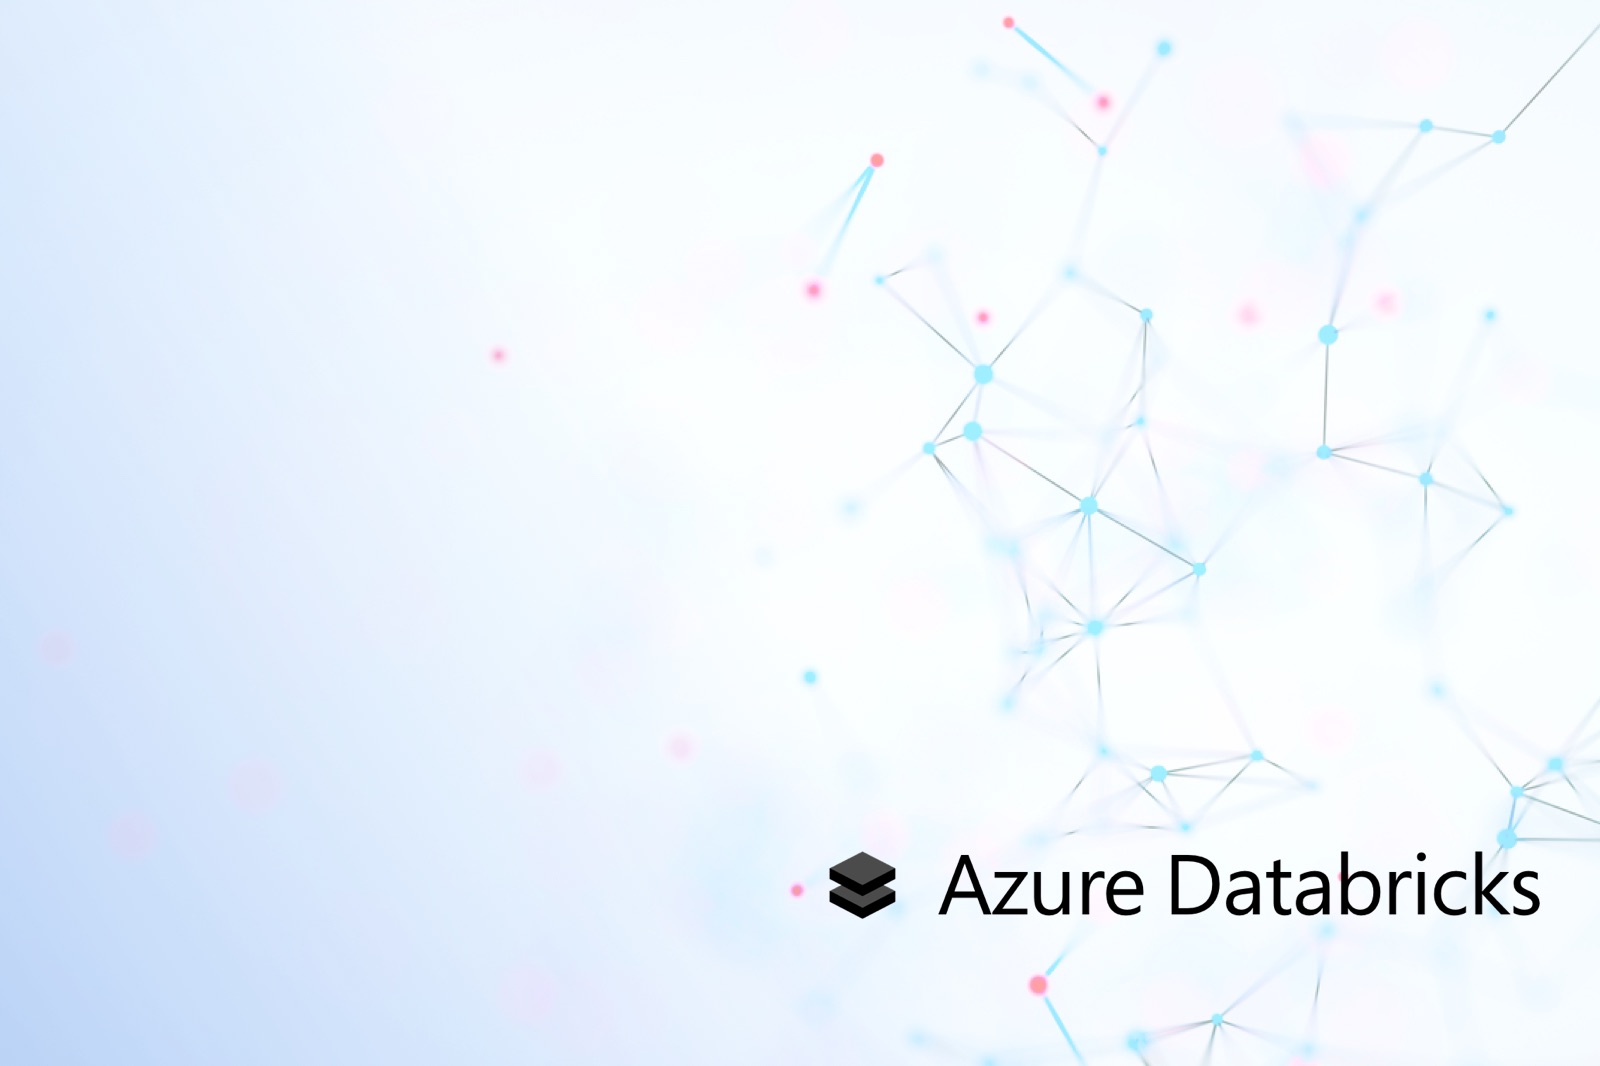 Abstract Background and Azure Databricks Logo